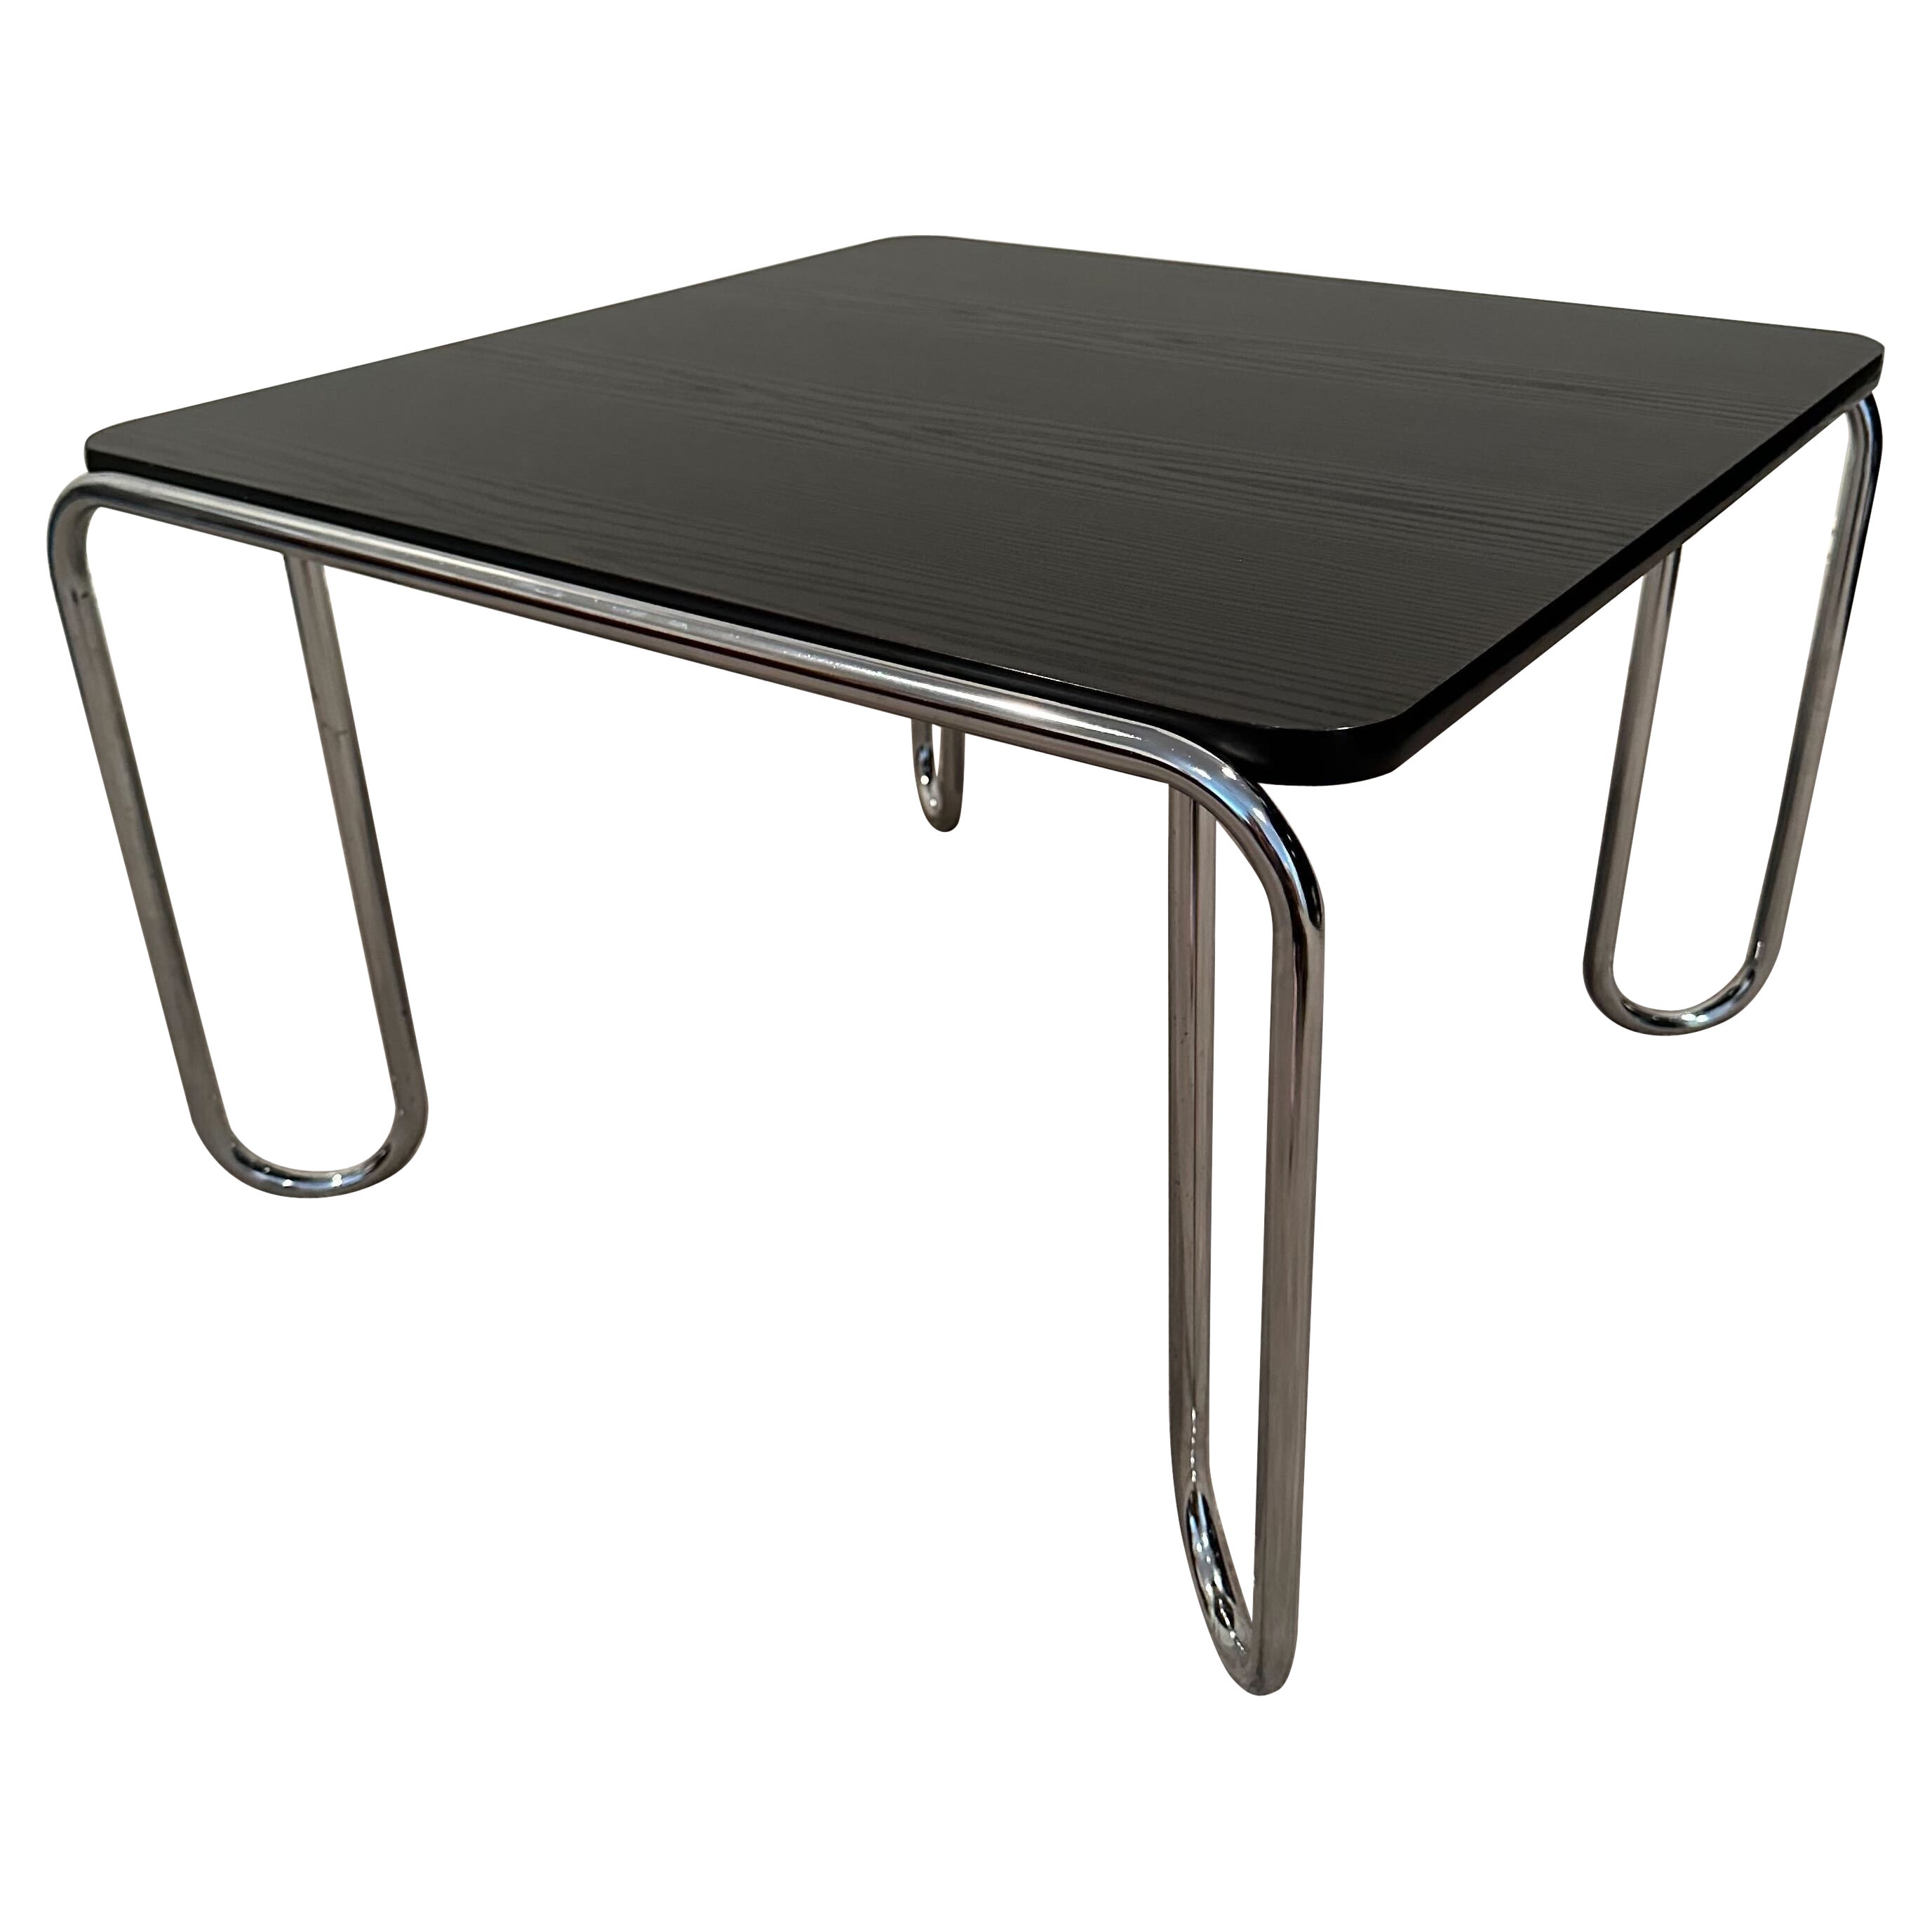 Black & Tubular Chrome Modernist Bauhaus Style Coffee Table After Marcel Breuer For Sale